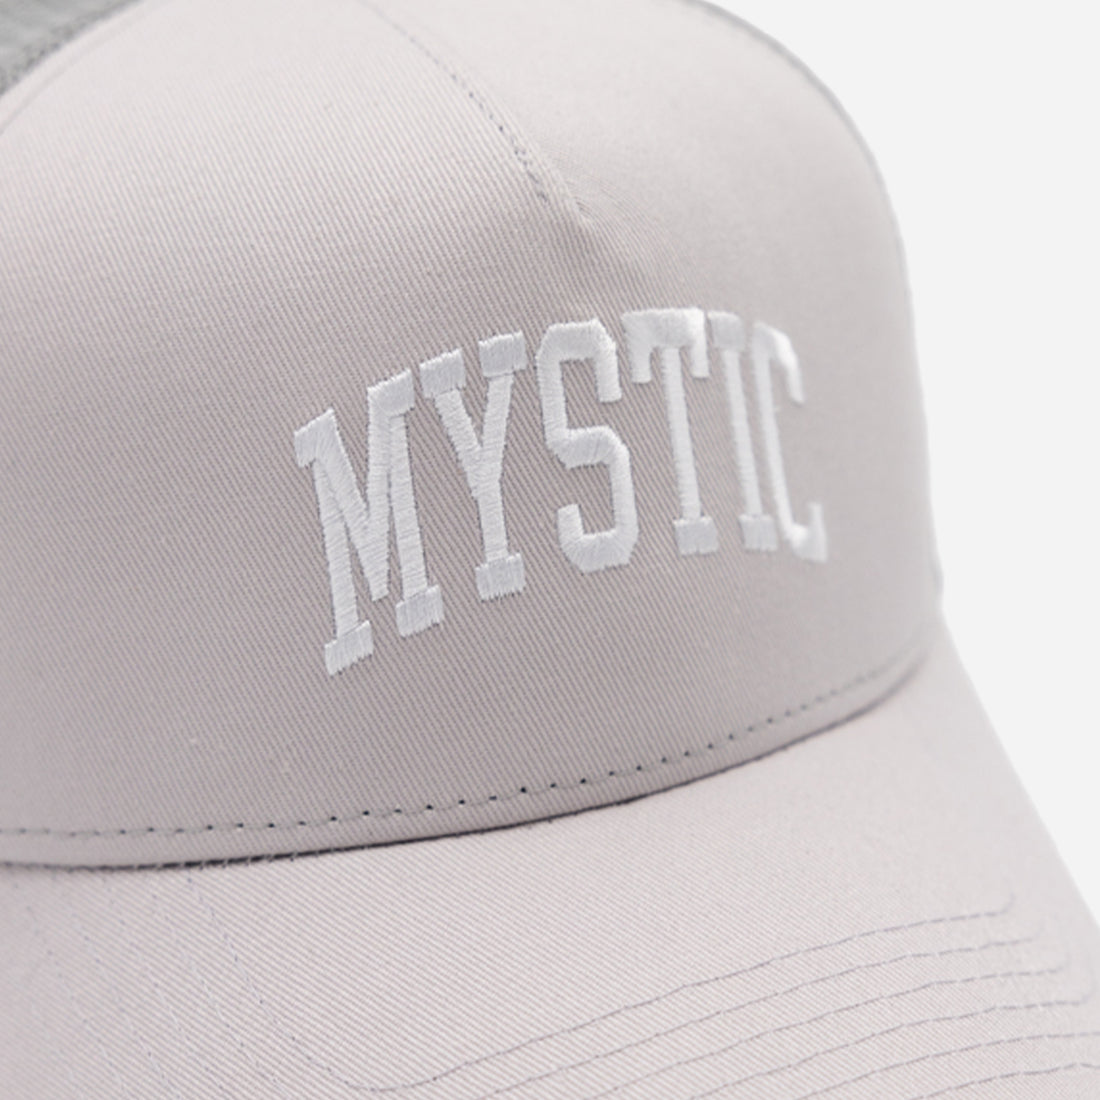 Mystic Trucker Hat in Gray